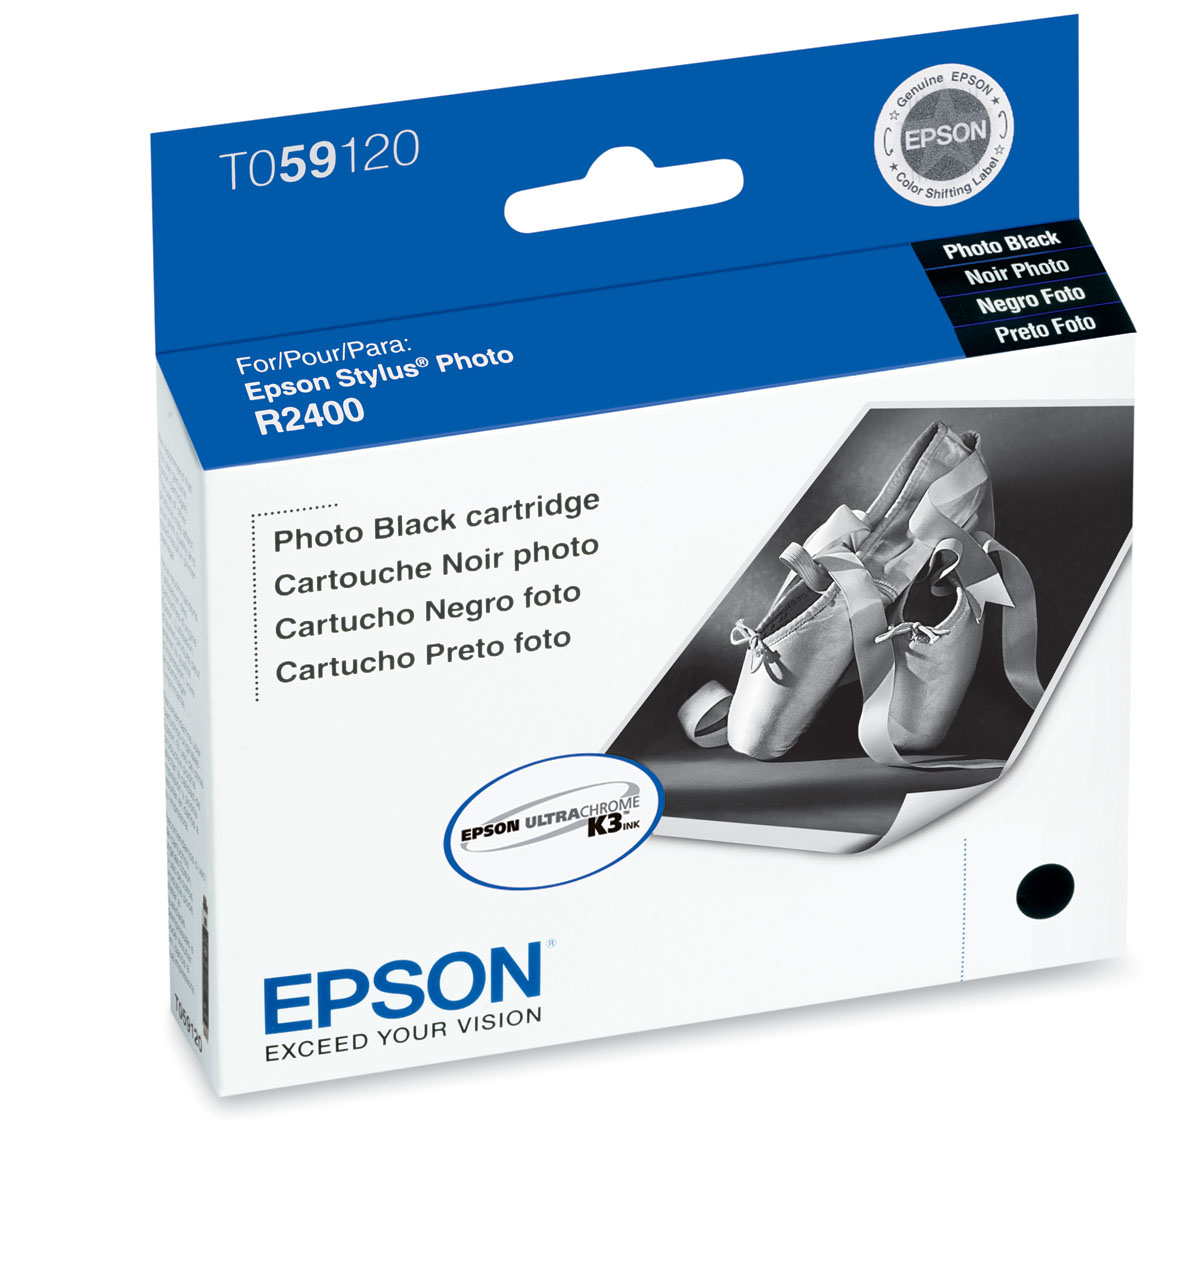 Epson R2400 Photo Black Ink (T059120)